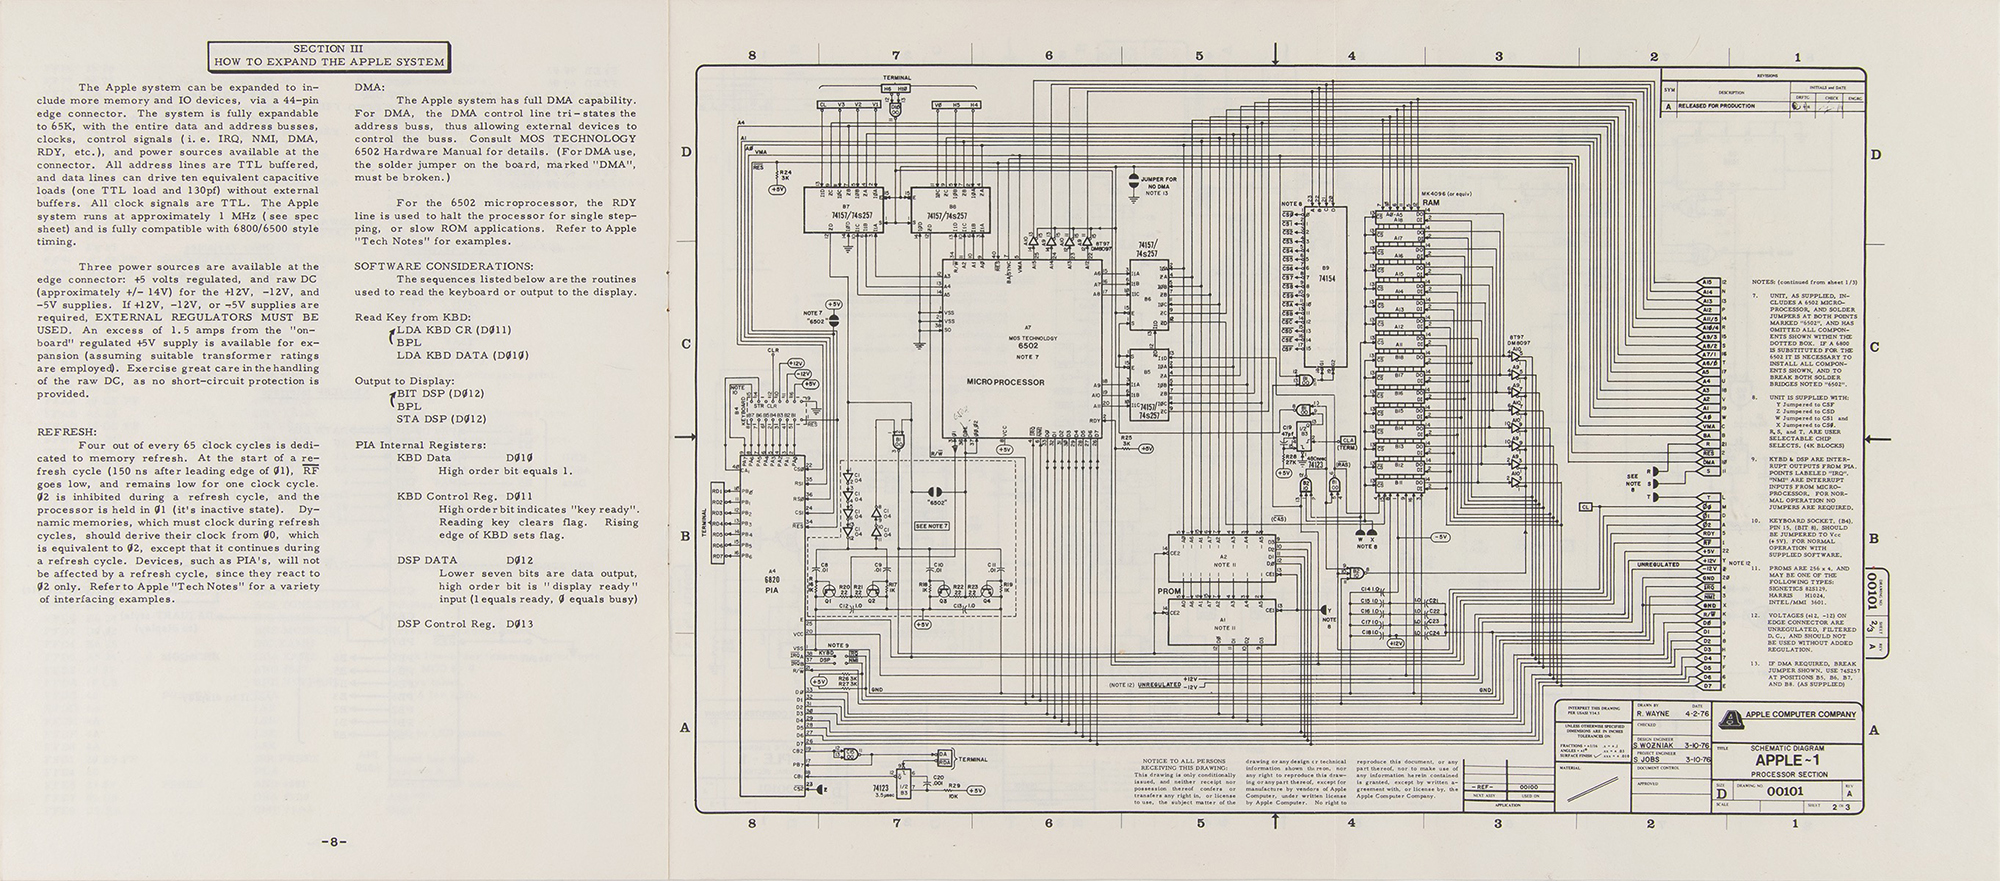 Lot #8025 Apple-1 Computer Operation Manual - Image 7